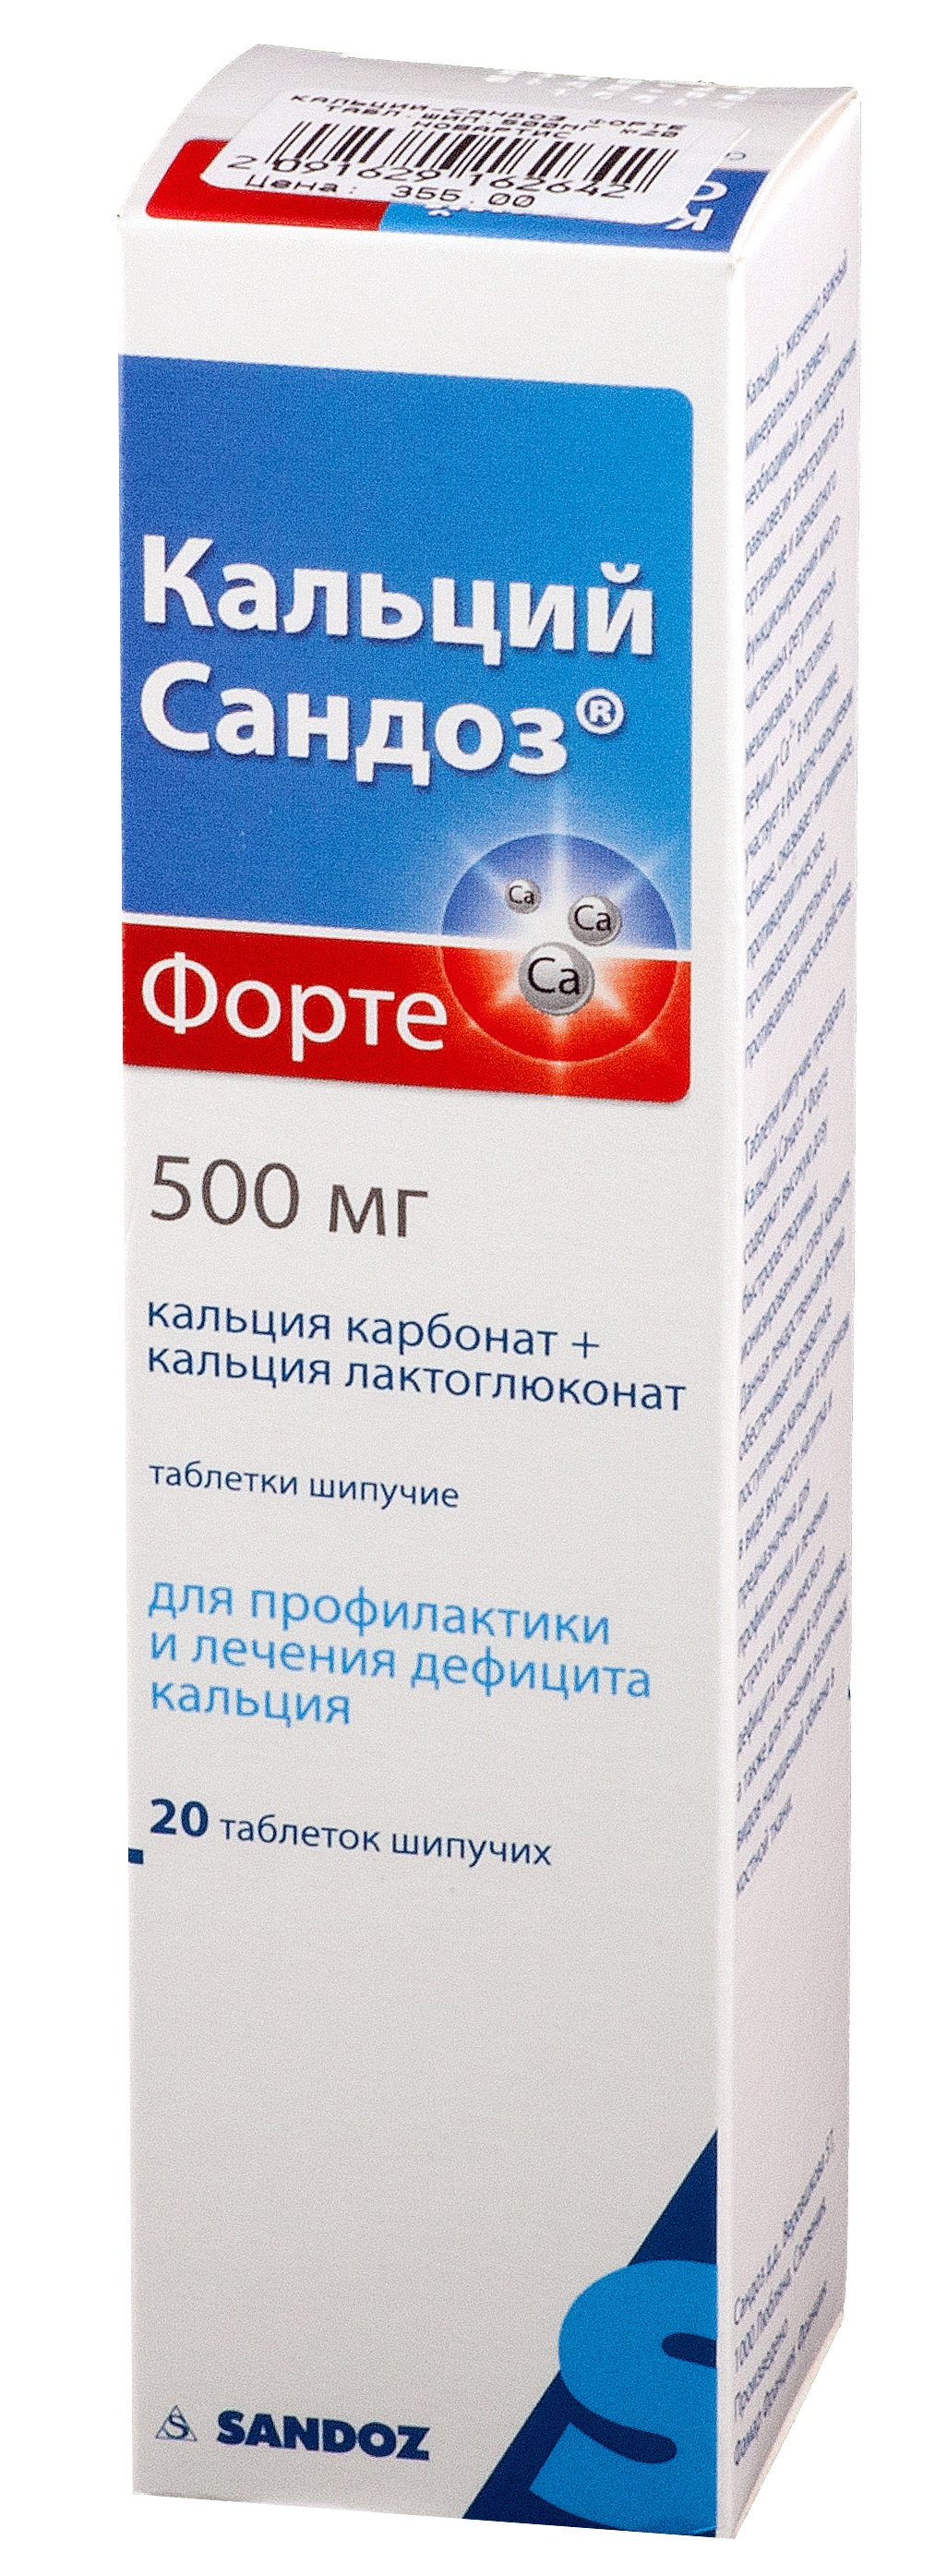 Кальций-Сандоз форте таблетки шипучие 500 мг. 20 шт рецепт равновесия 30 карт от тревоги и депрессии